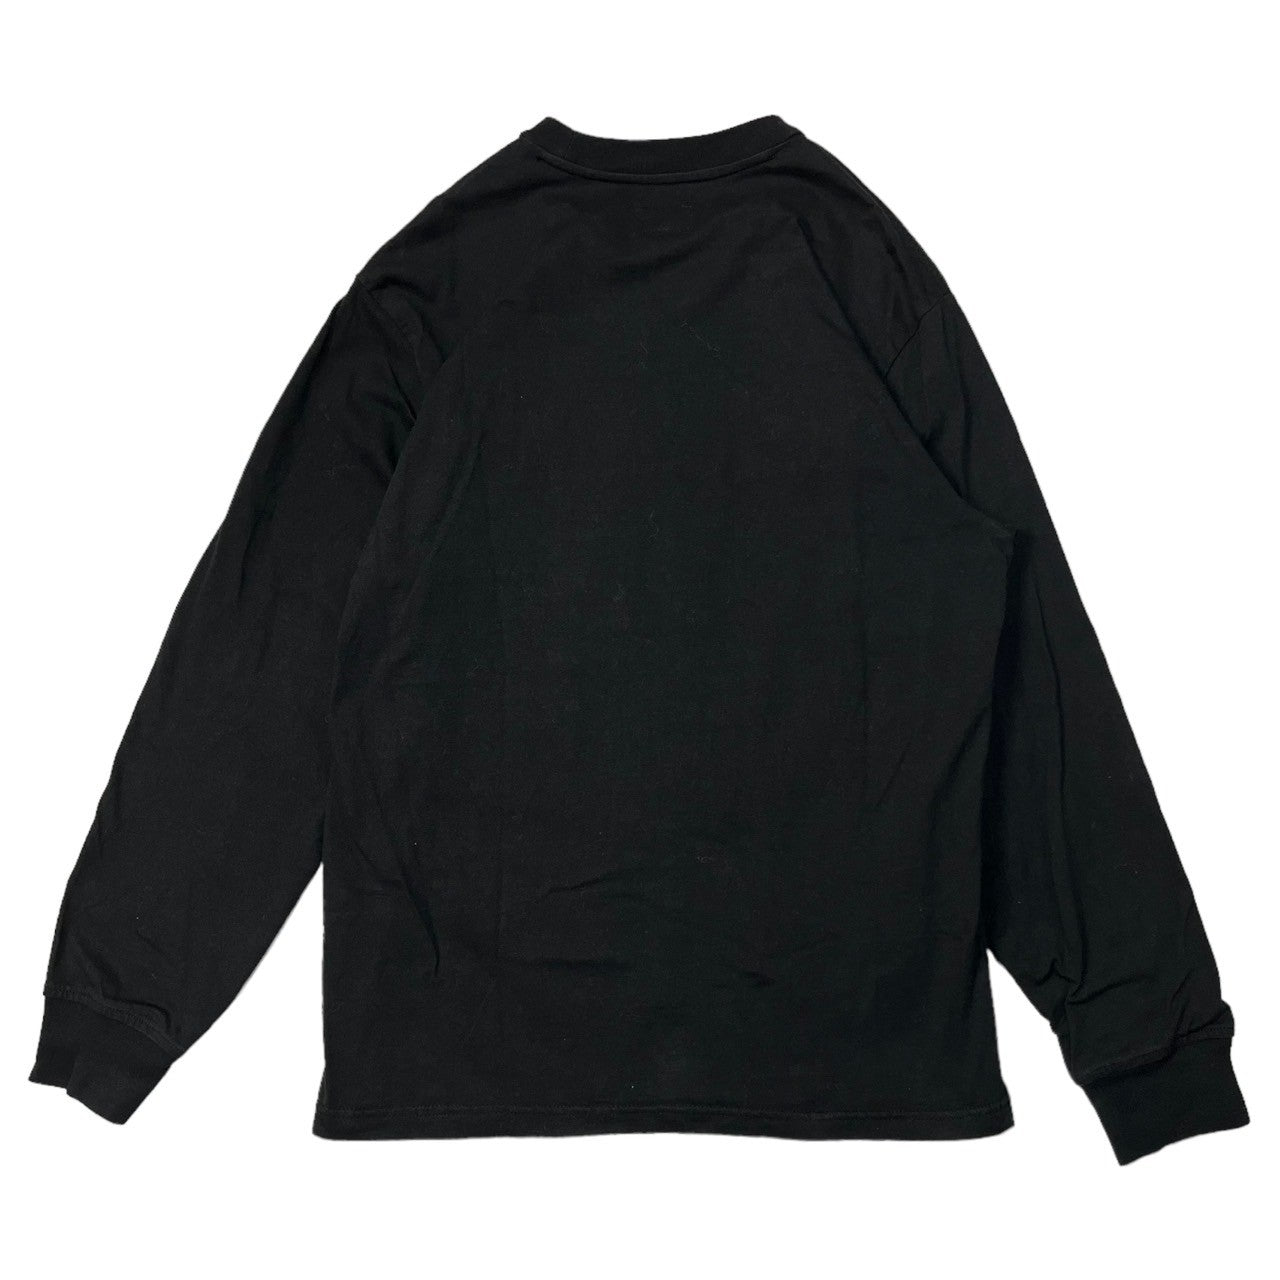 SUPREME(シュプリーム) 20SS Studded L/S Top Tee スタッズ ロゴ ロンT 長袖 カットソー Tシャツ S ブラック